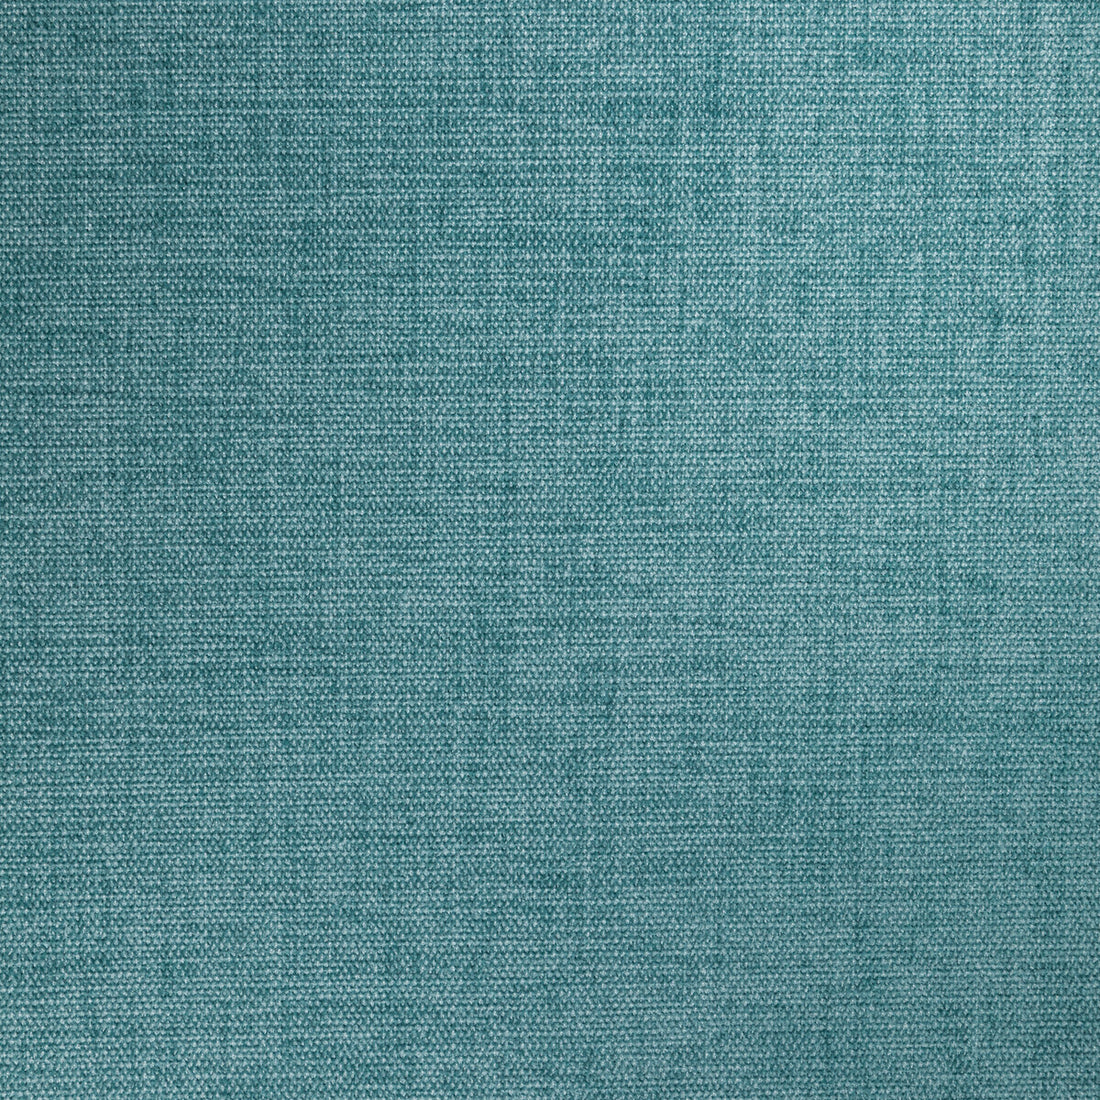 Kravet Smart fabric in 34959-115 color - pattern 34959.115.0 - by Kravet Smart in the Performance Kravetarmor collection